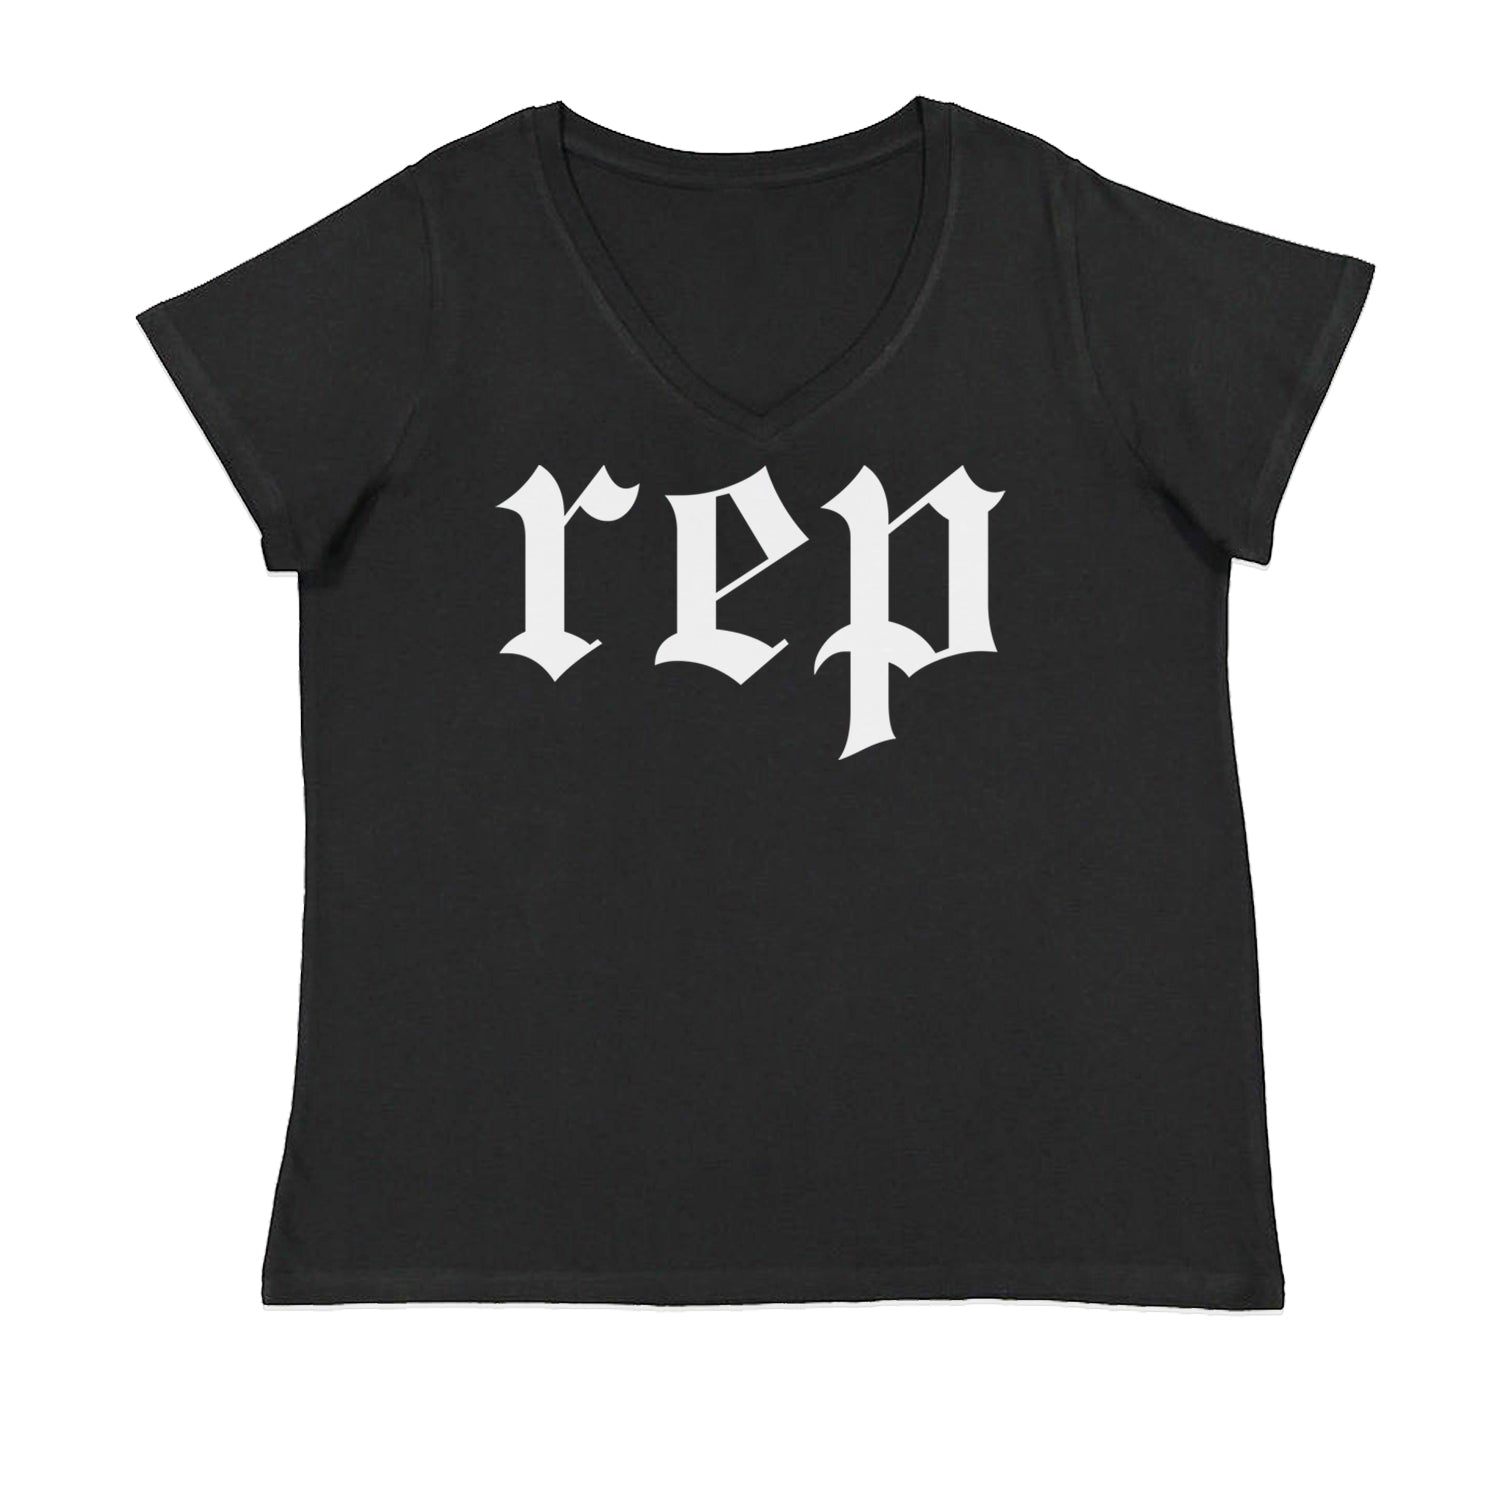 REP Reputation Eras Music Lover Gift Fan Favorite Ladies V-Neck T-shirt Black